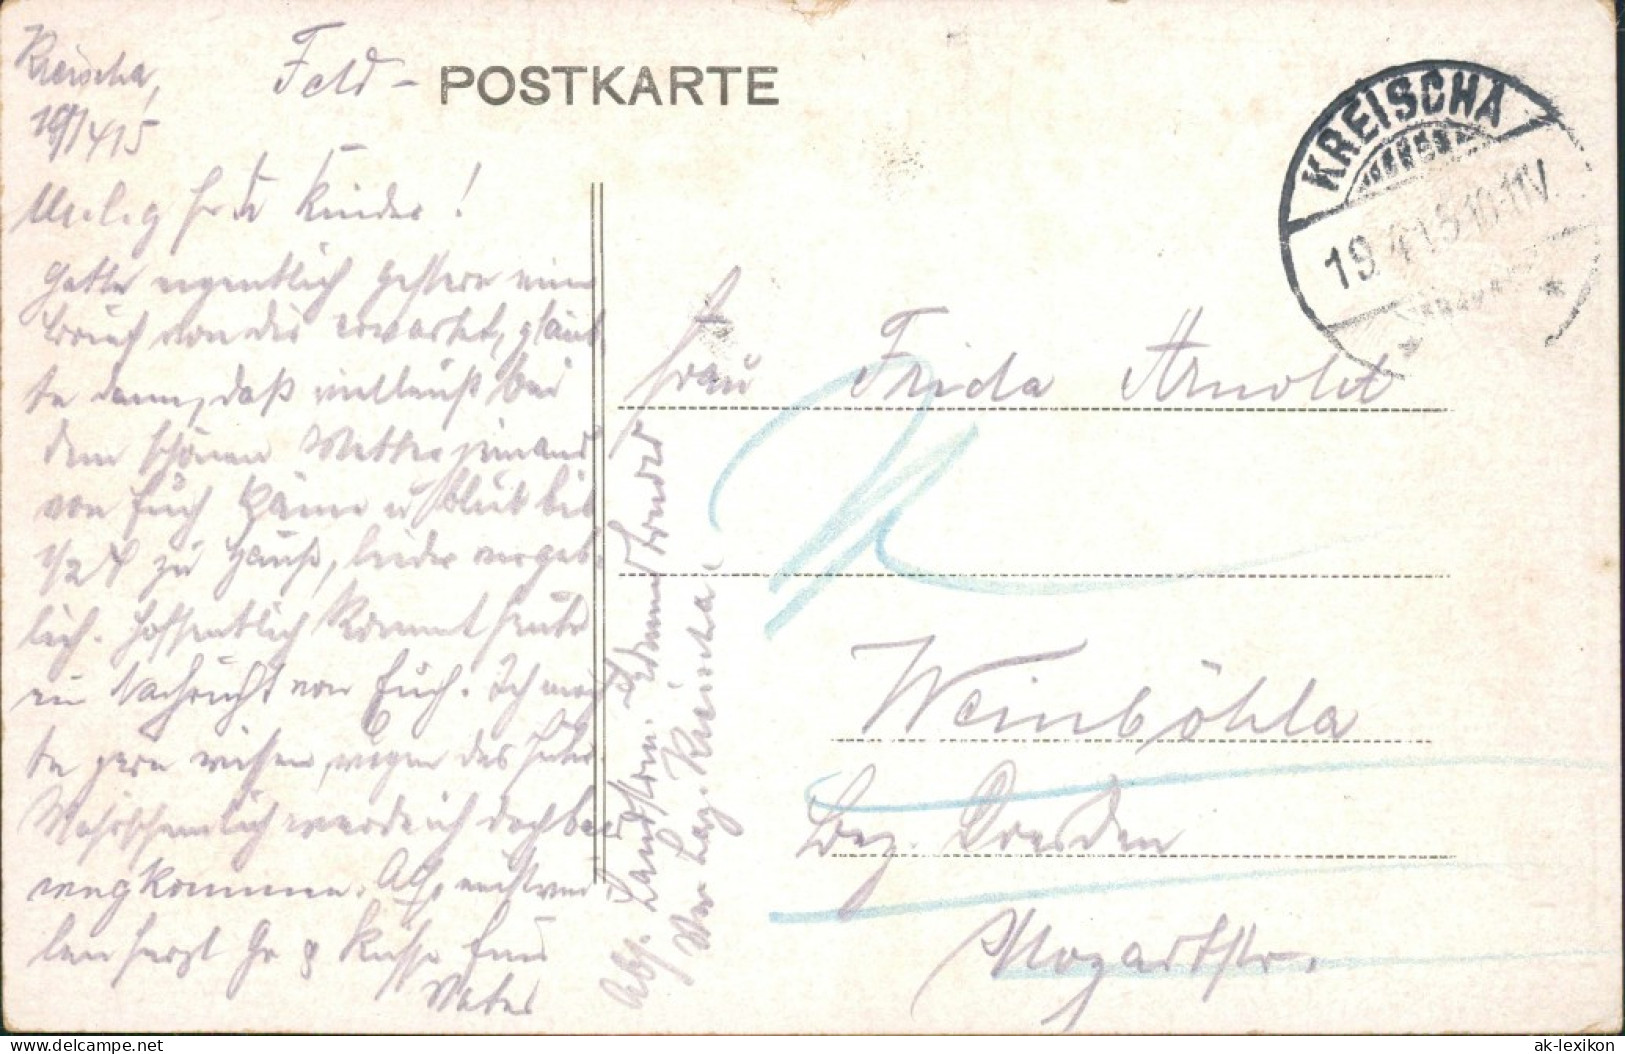 Ansichtskarte Kreischa Villa Eisrig - Sanitätsrat Dr. Bartels 1908  - Kreischa